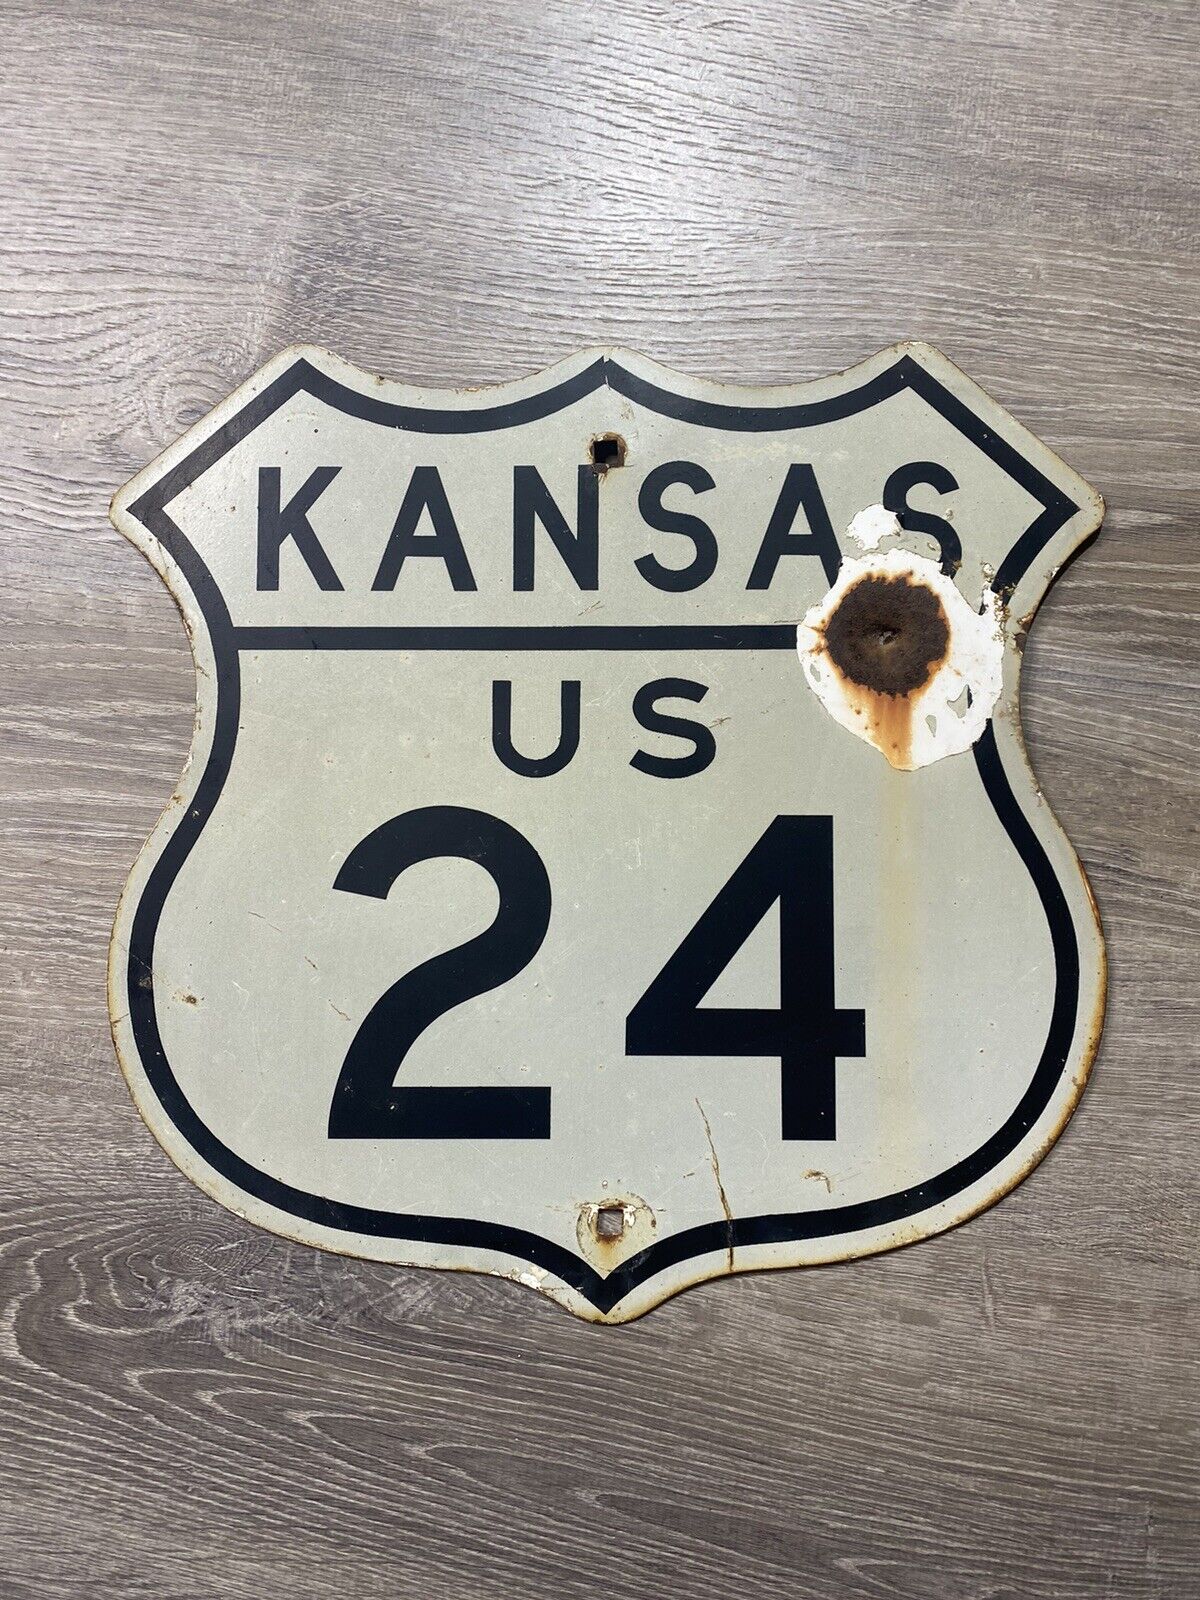 Vintage Kansas US 24 Highway Sign, Retired